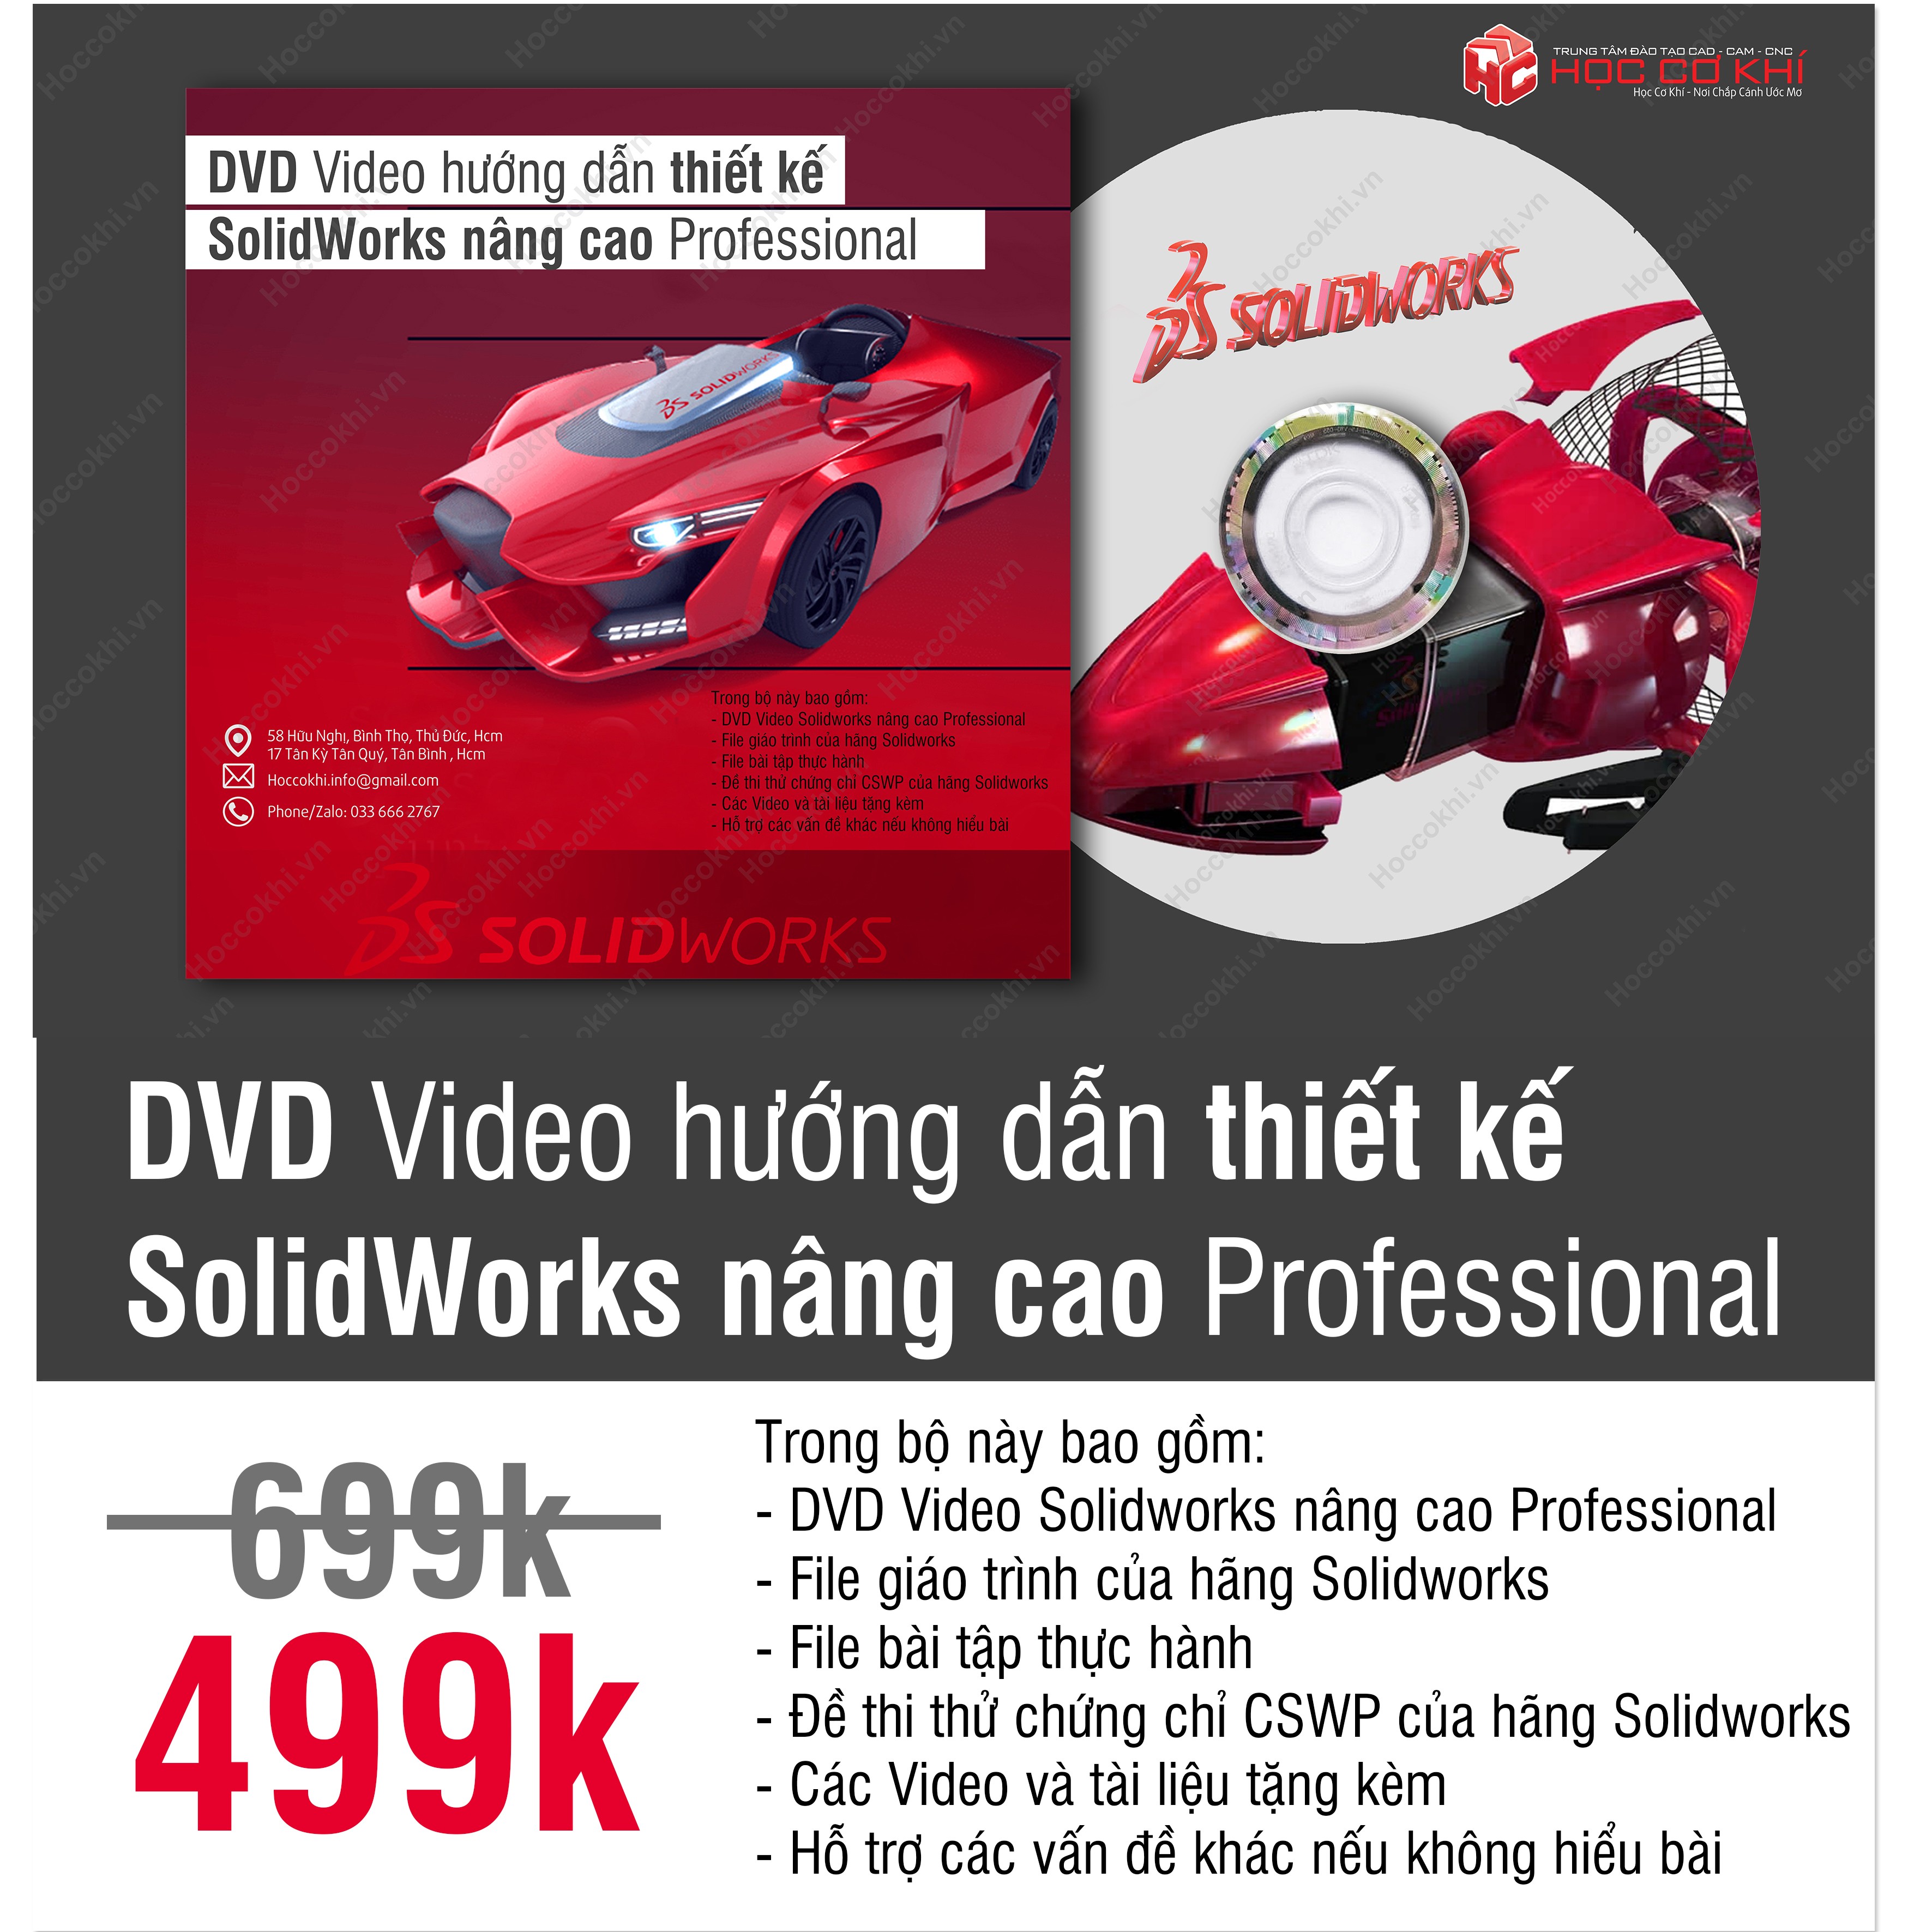 DVD Video hướng dẫn thiết kế SolidWorks nâng cao Professional